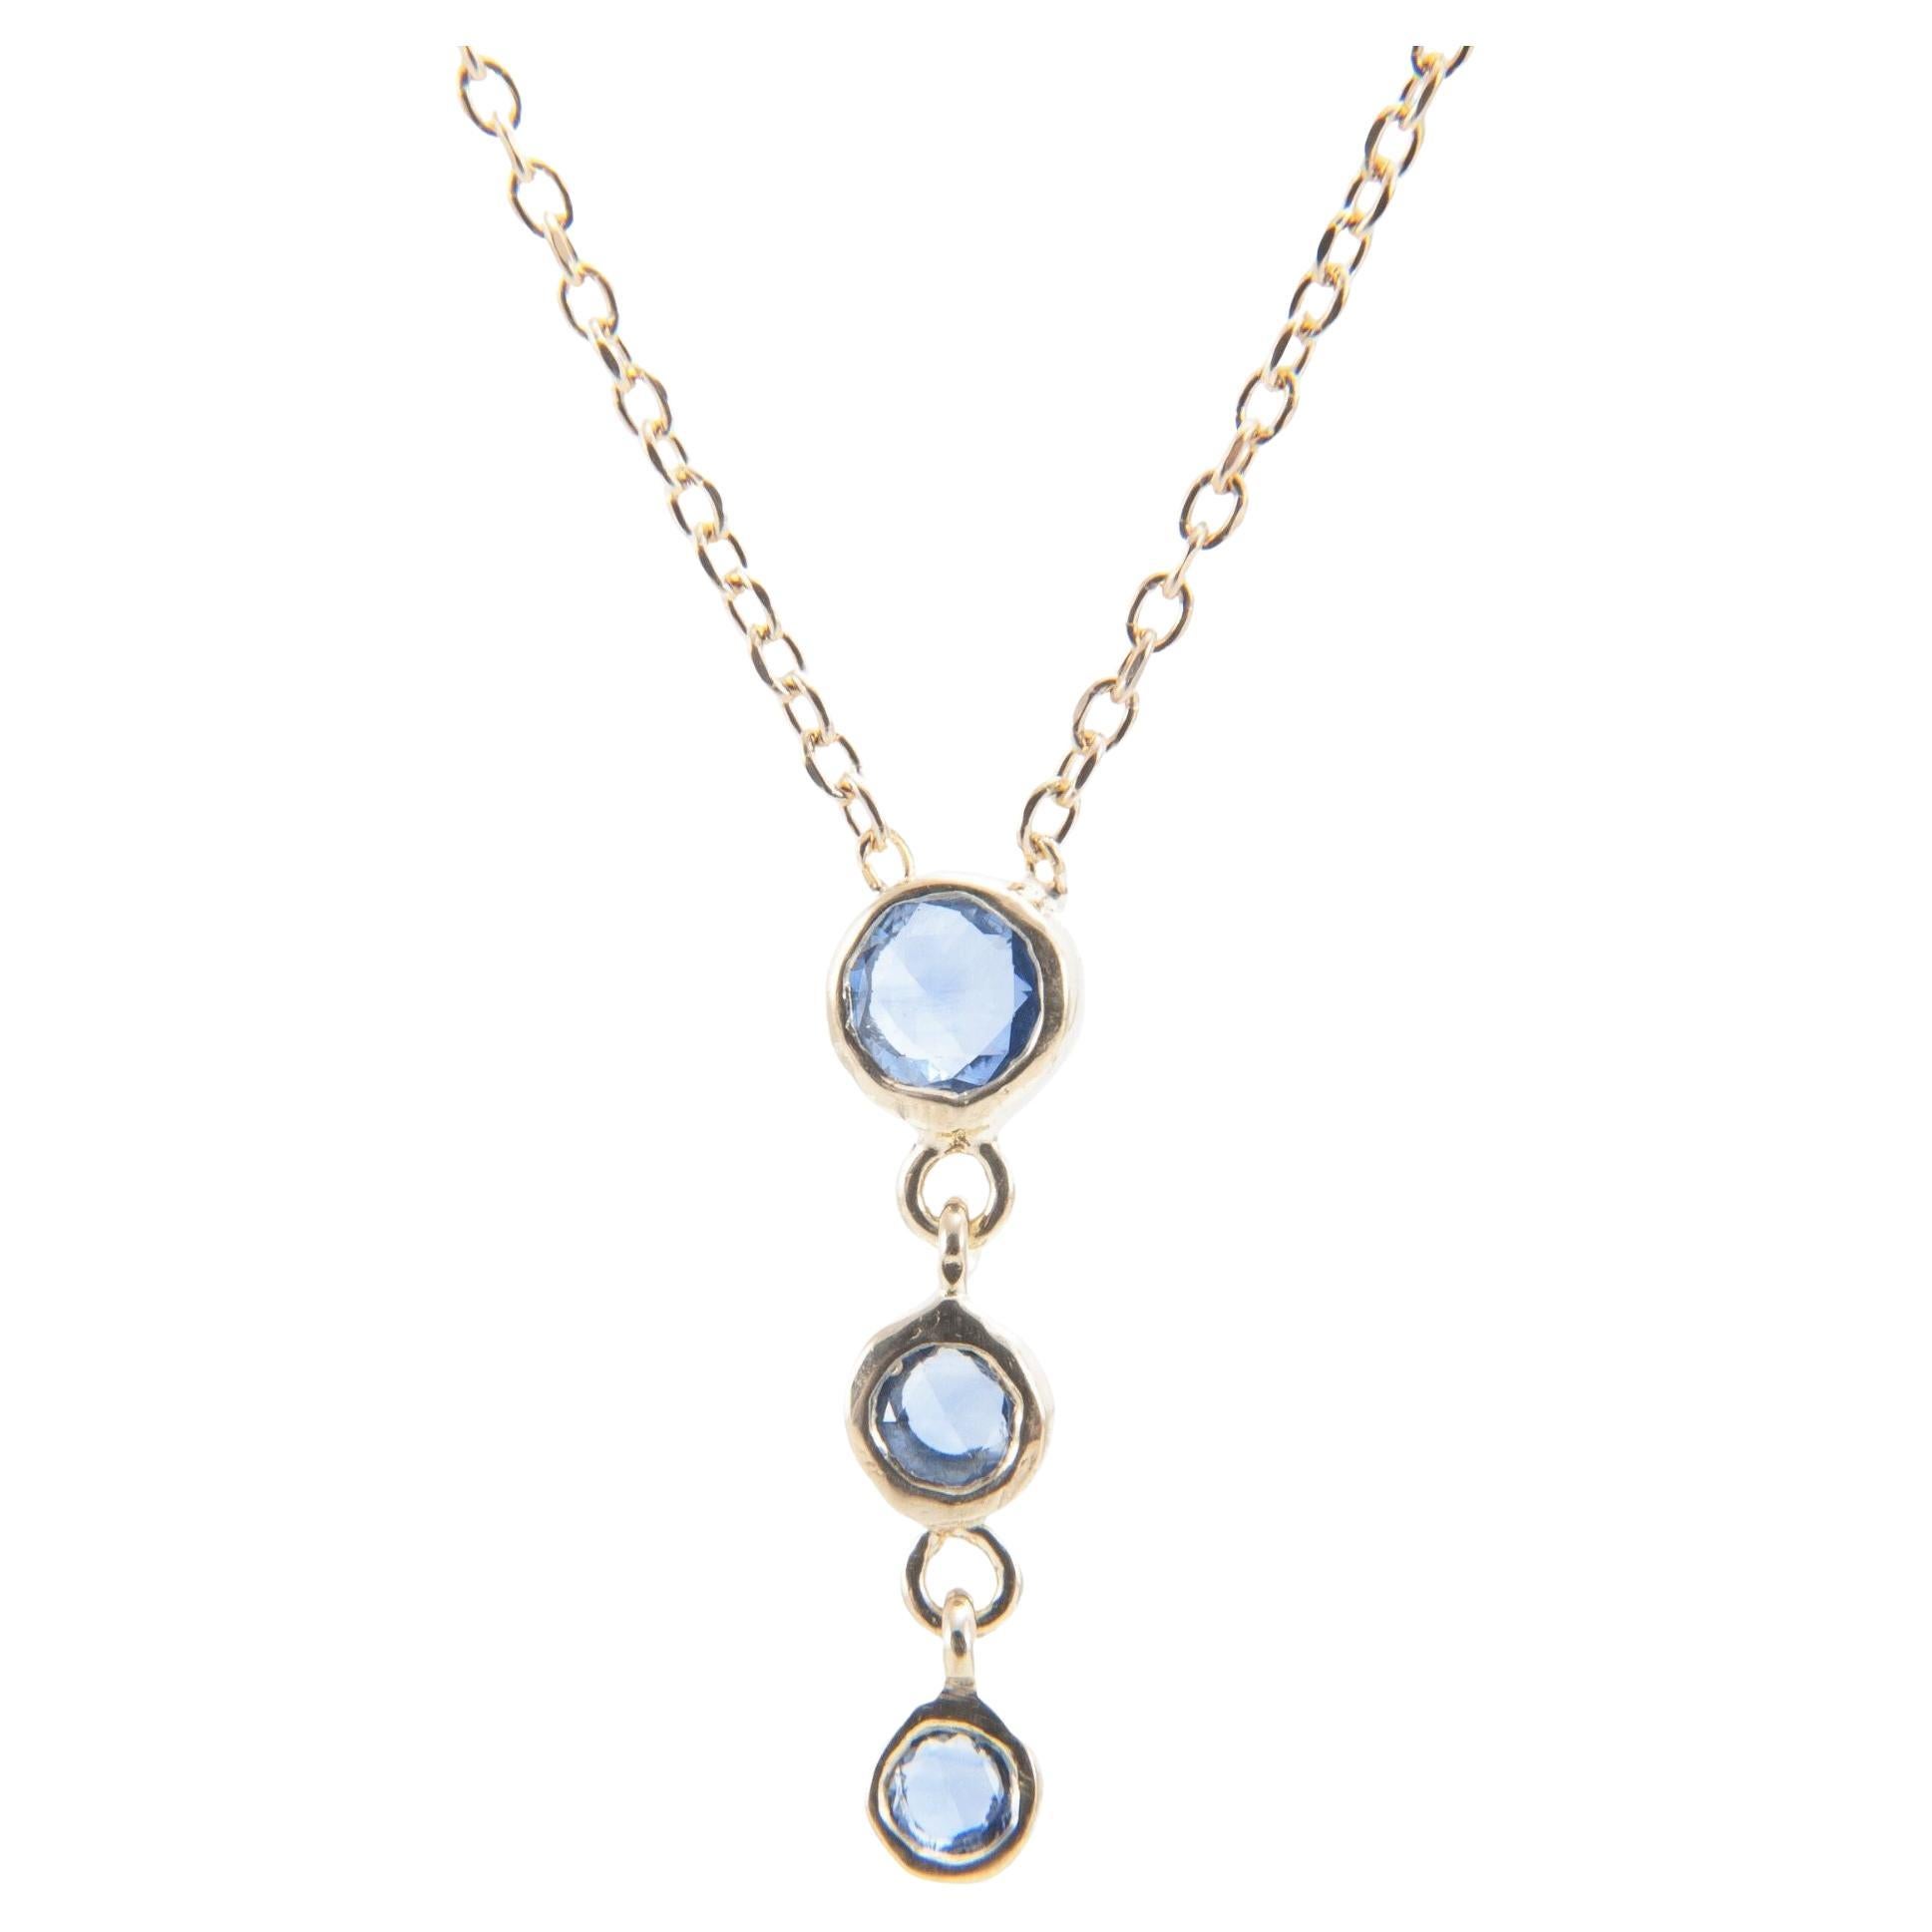 Cascade Trinity Blue Sapphire Halskette